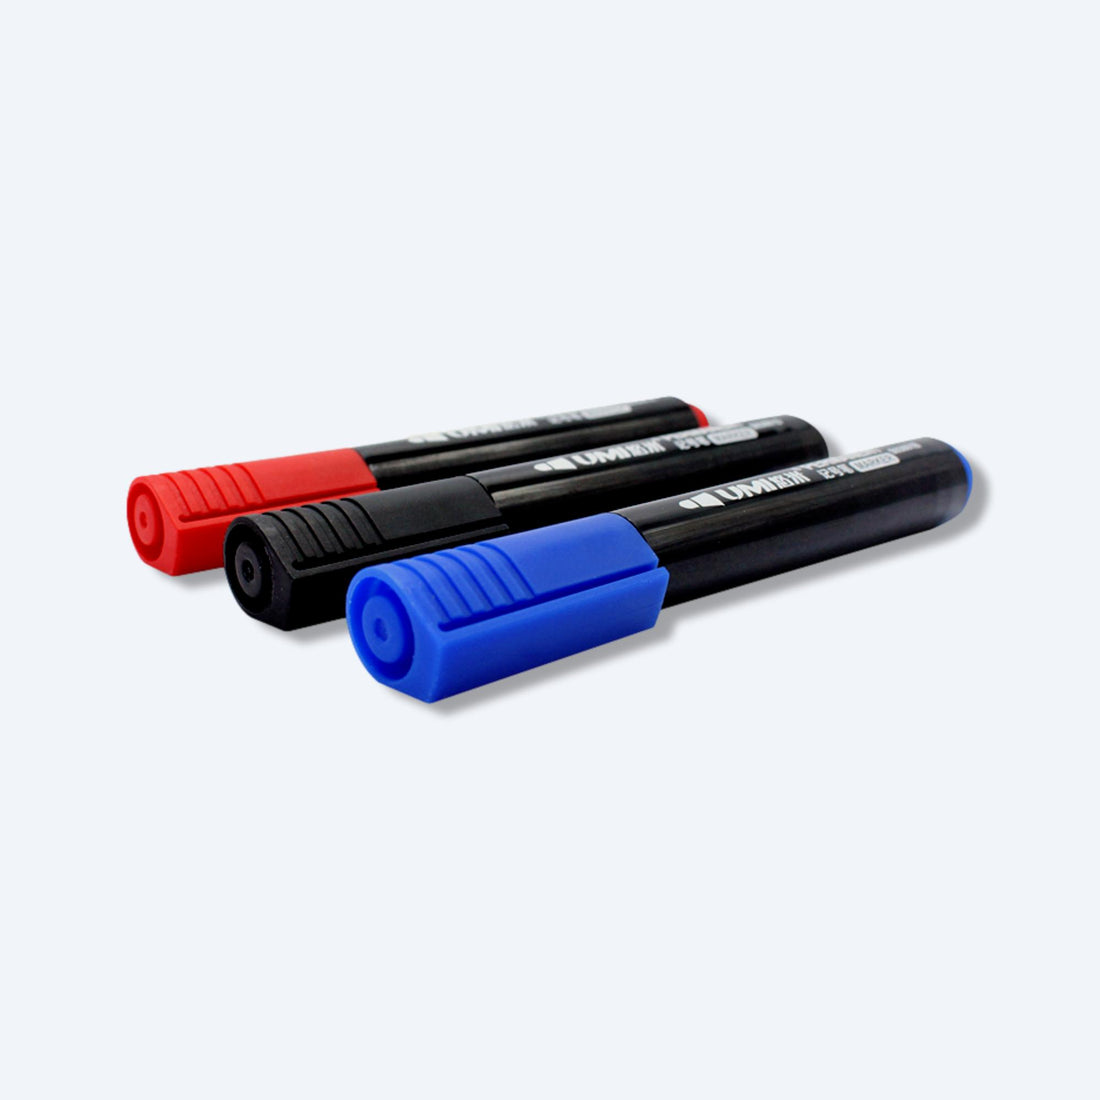 UMI - Red Case Pen S03001R